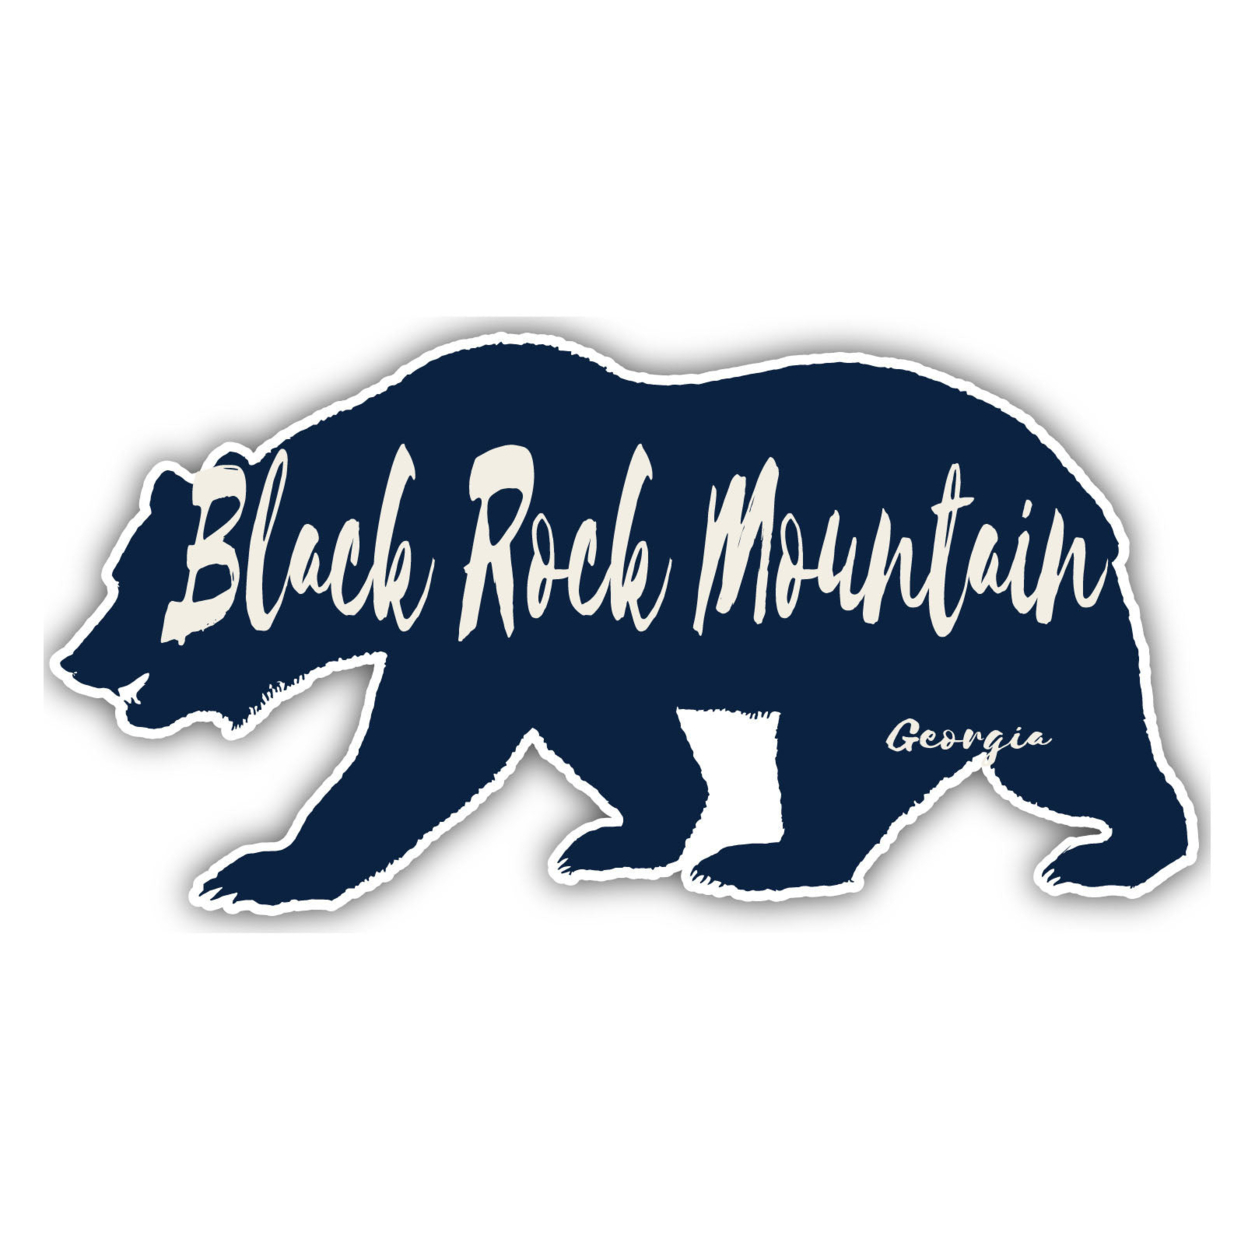 Black Rock Mountain Georgia Souvenir Decorative Stickers (Choose Theme And Size) - 4-Pack, 2-Inch, Bear